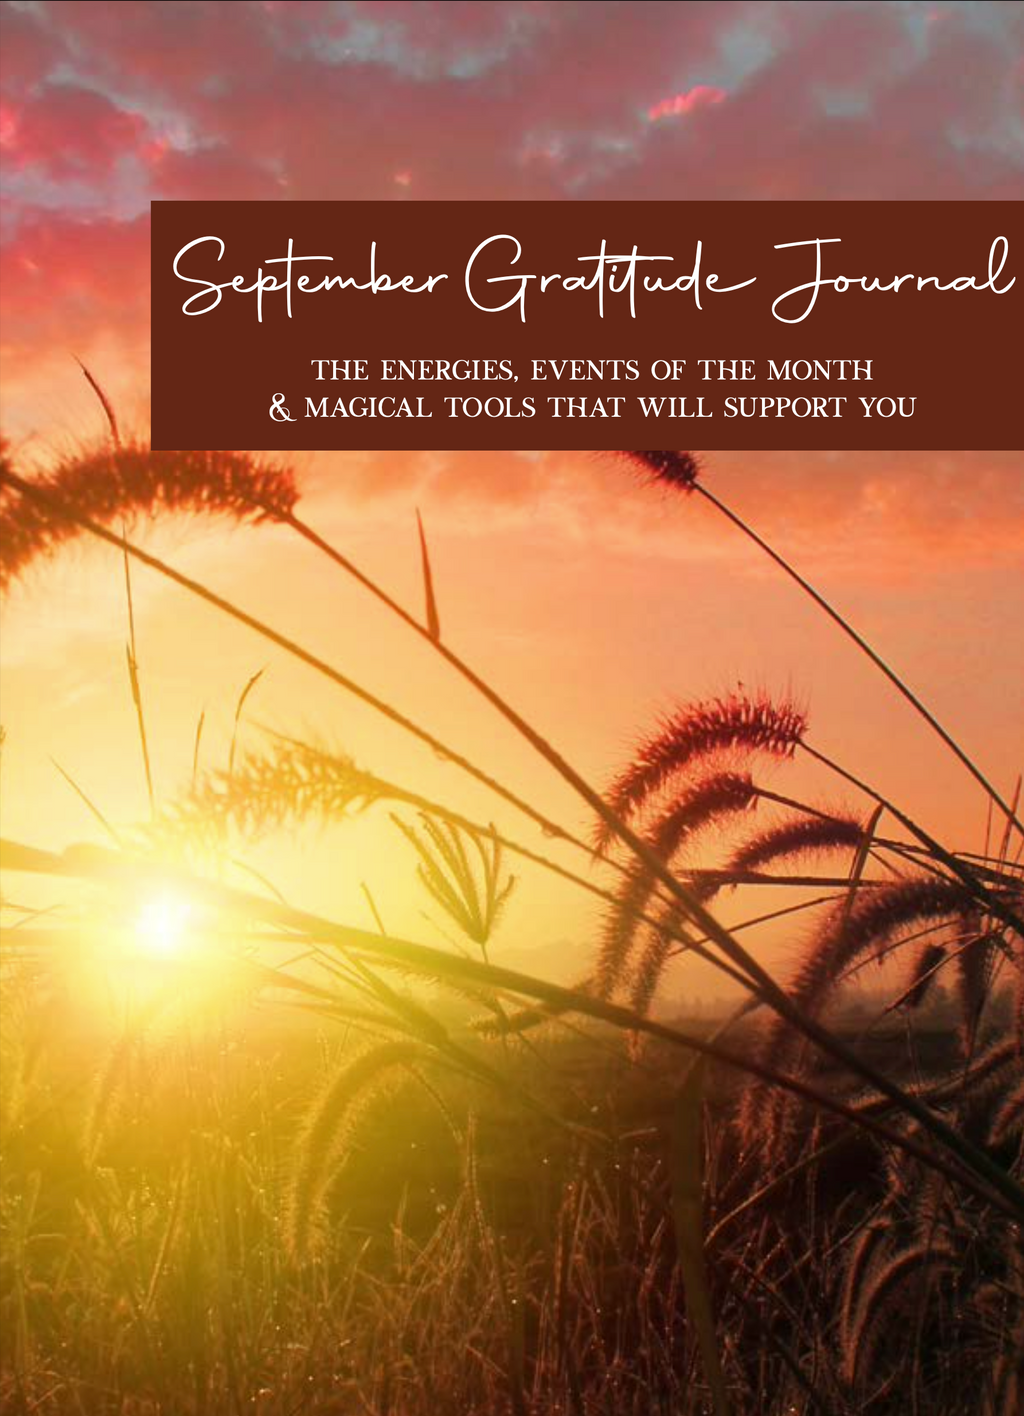 July Gratitude Journal